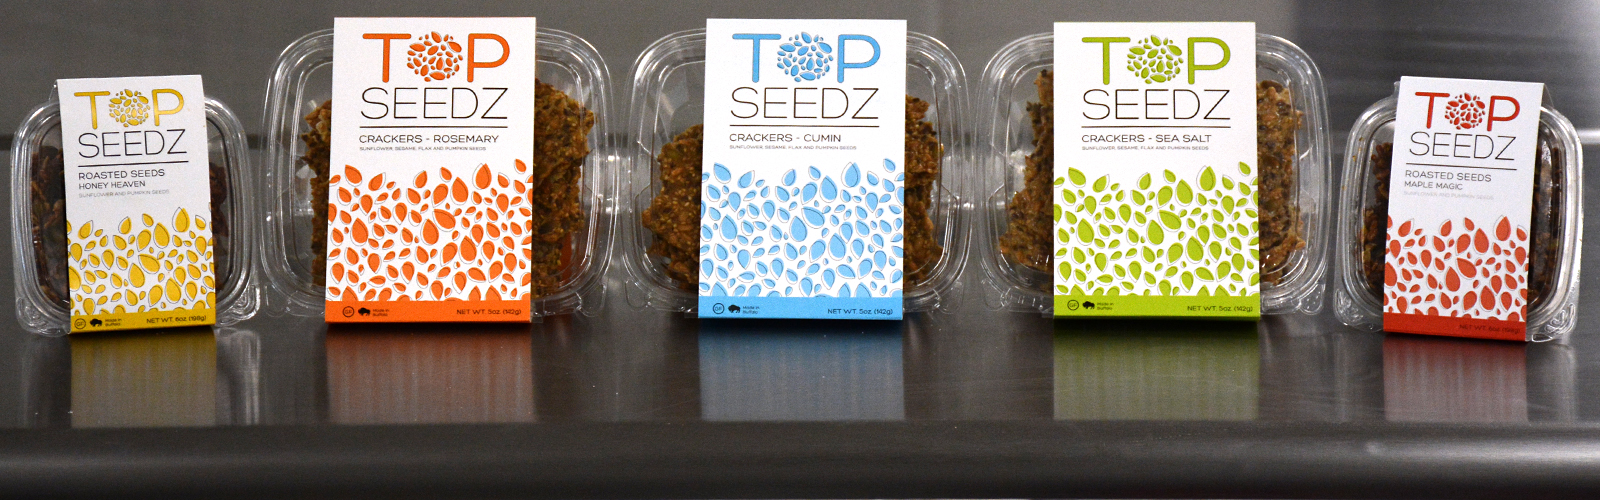 Top Seedz sunflower, sesame, flax, and pumpkin seeds line of health crackers. 